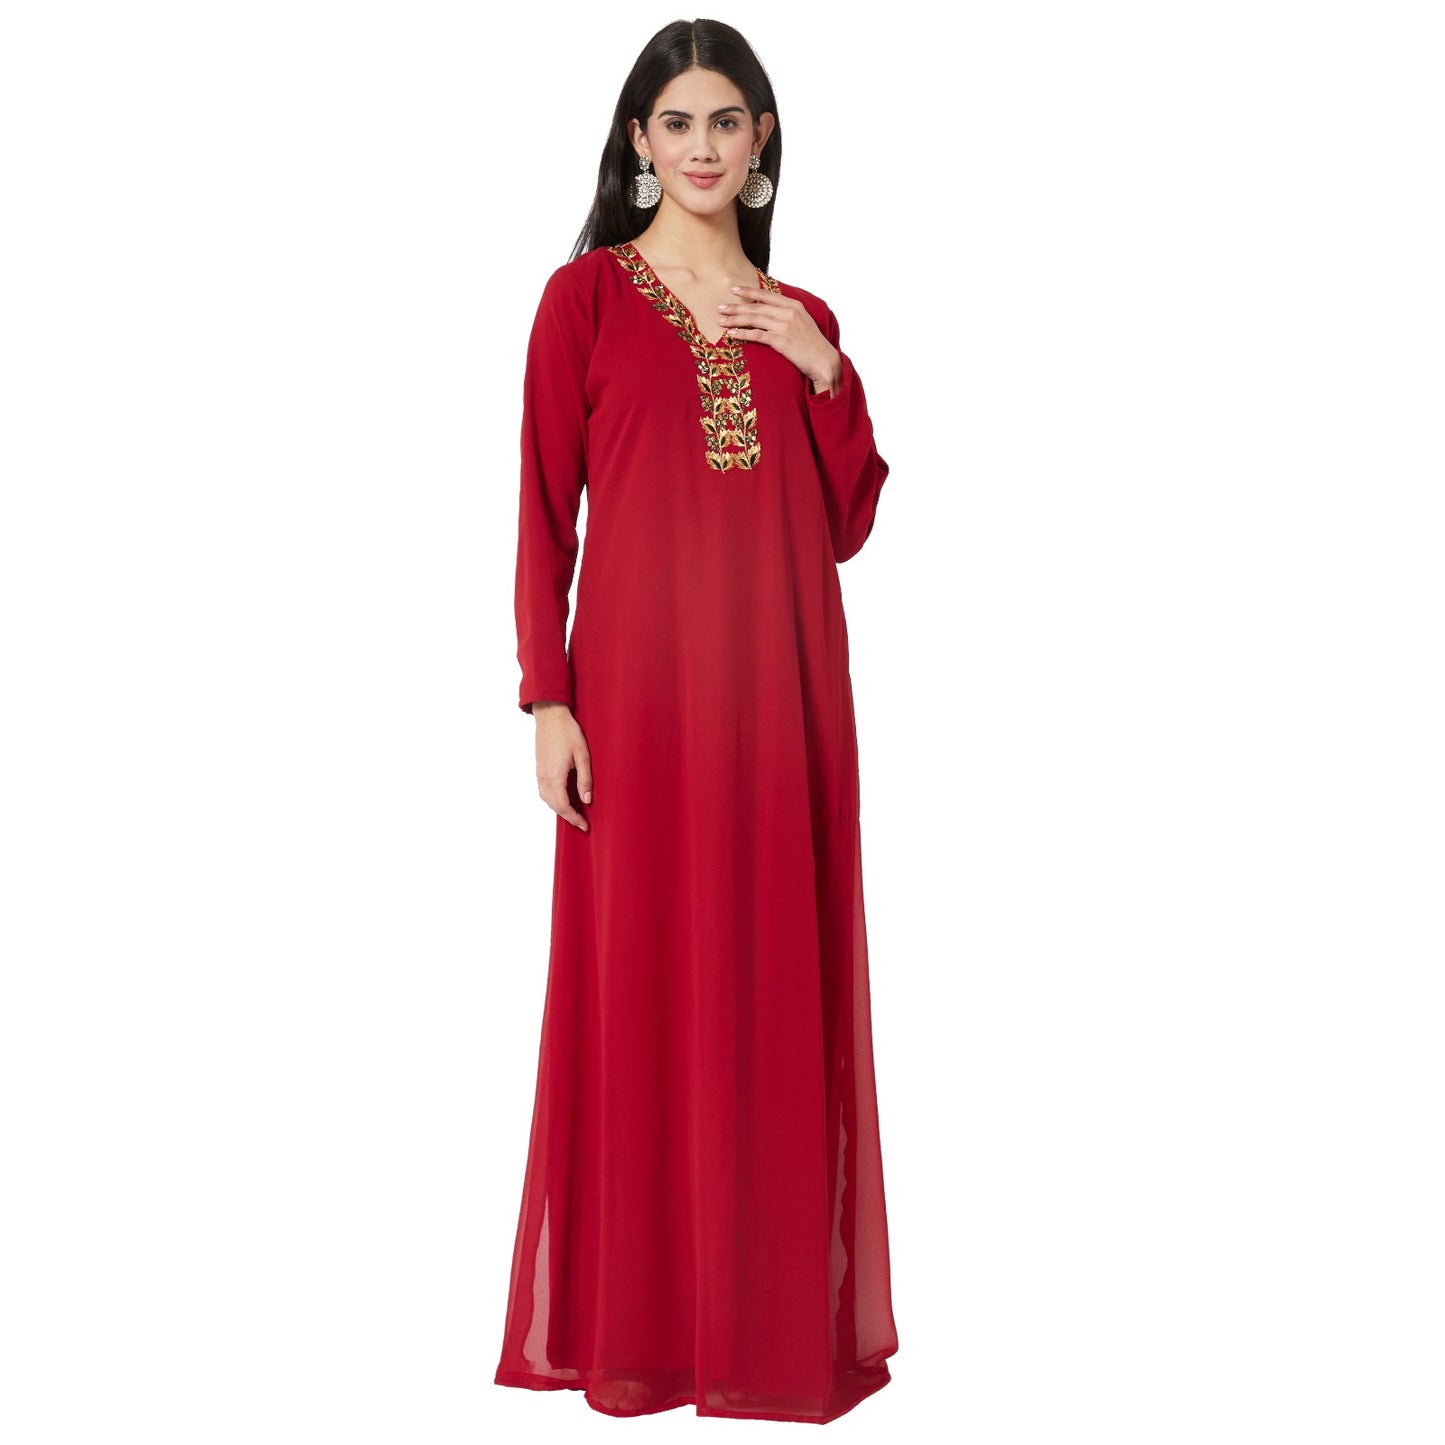 Henna Tea Party Gown Red Farasha Maxi Dress